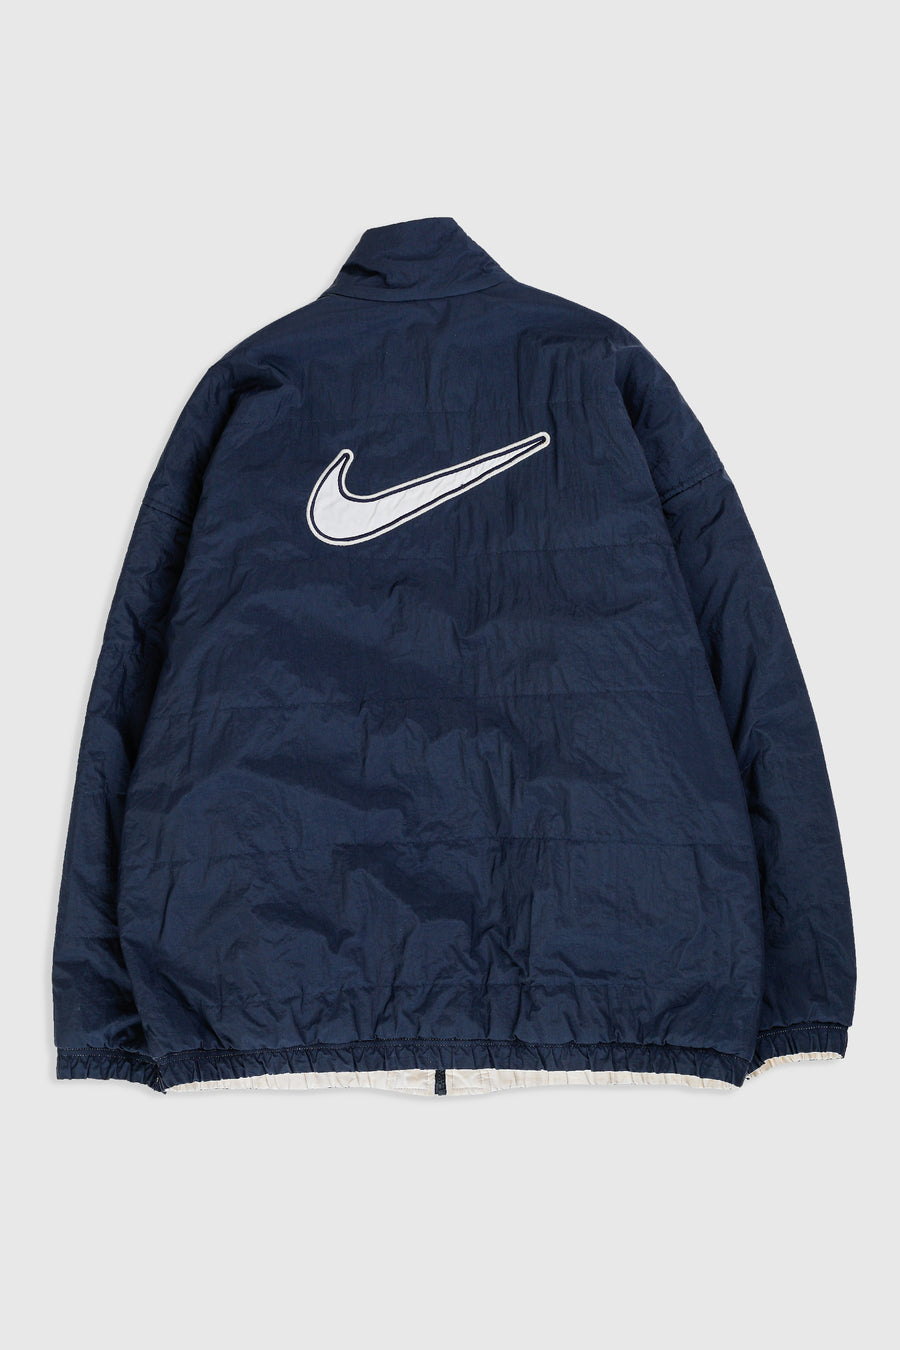 Vintage Nike Puffer Jacket - XXL